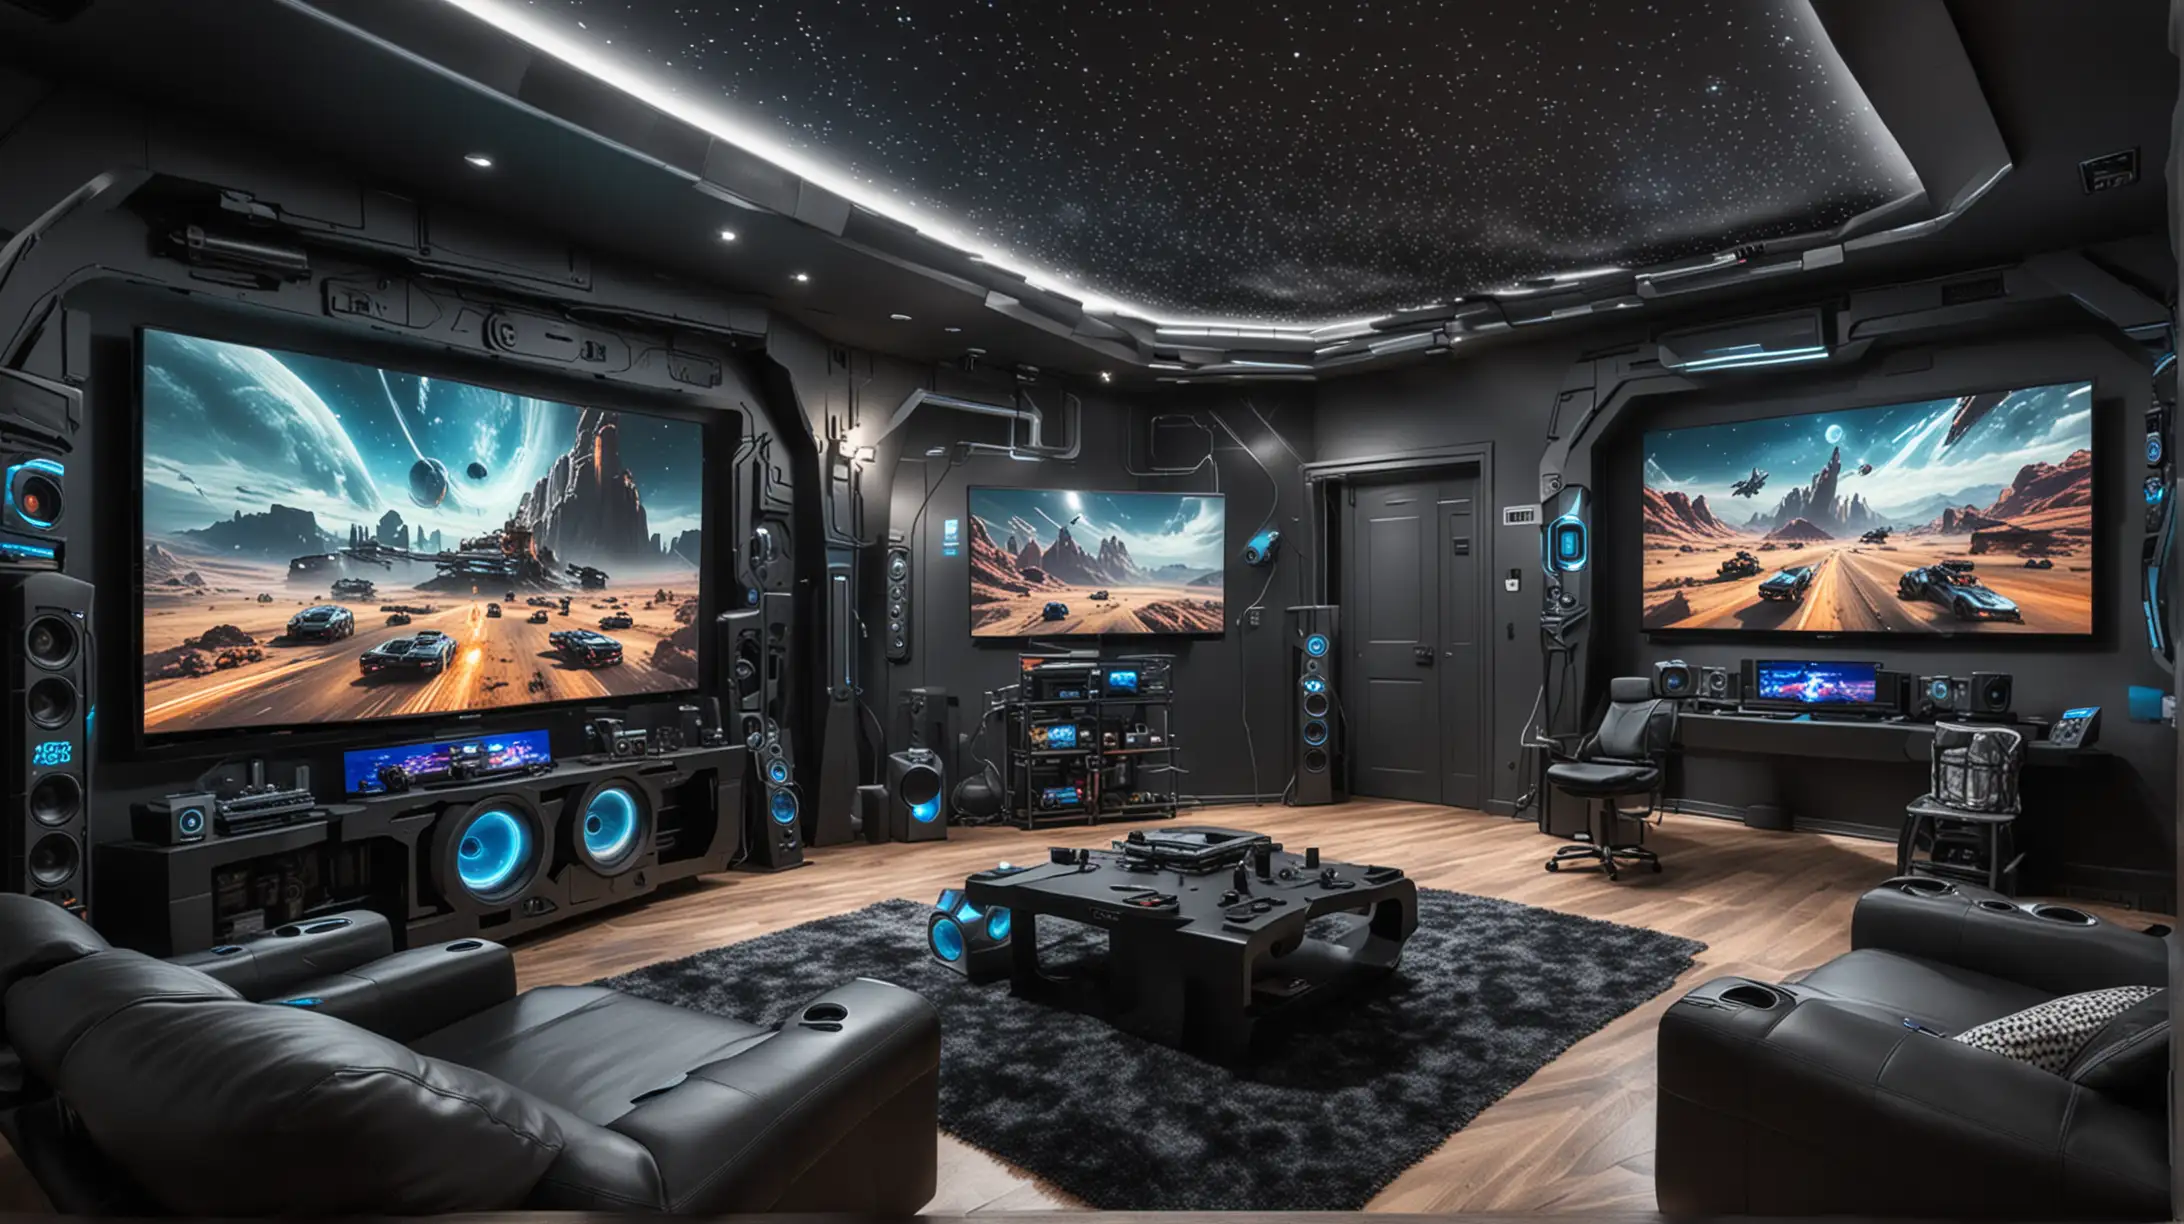 Ultimate Futuristic Geek Gamer PC Setup and Playroom with Home Cinema